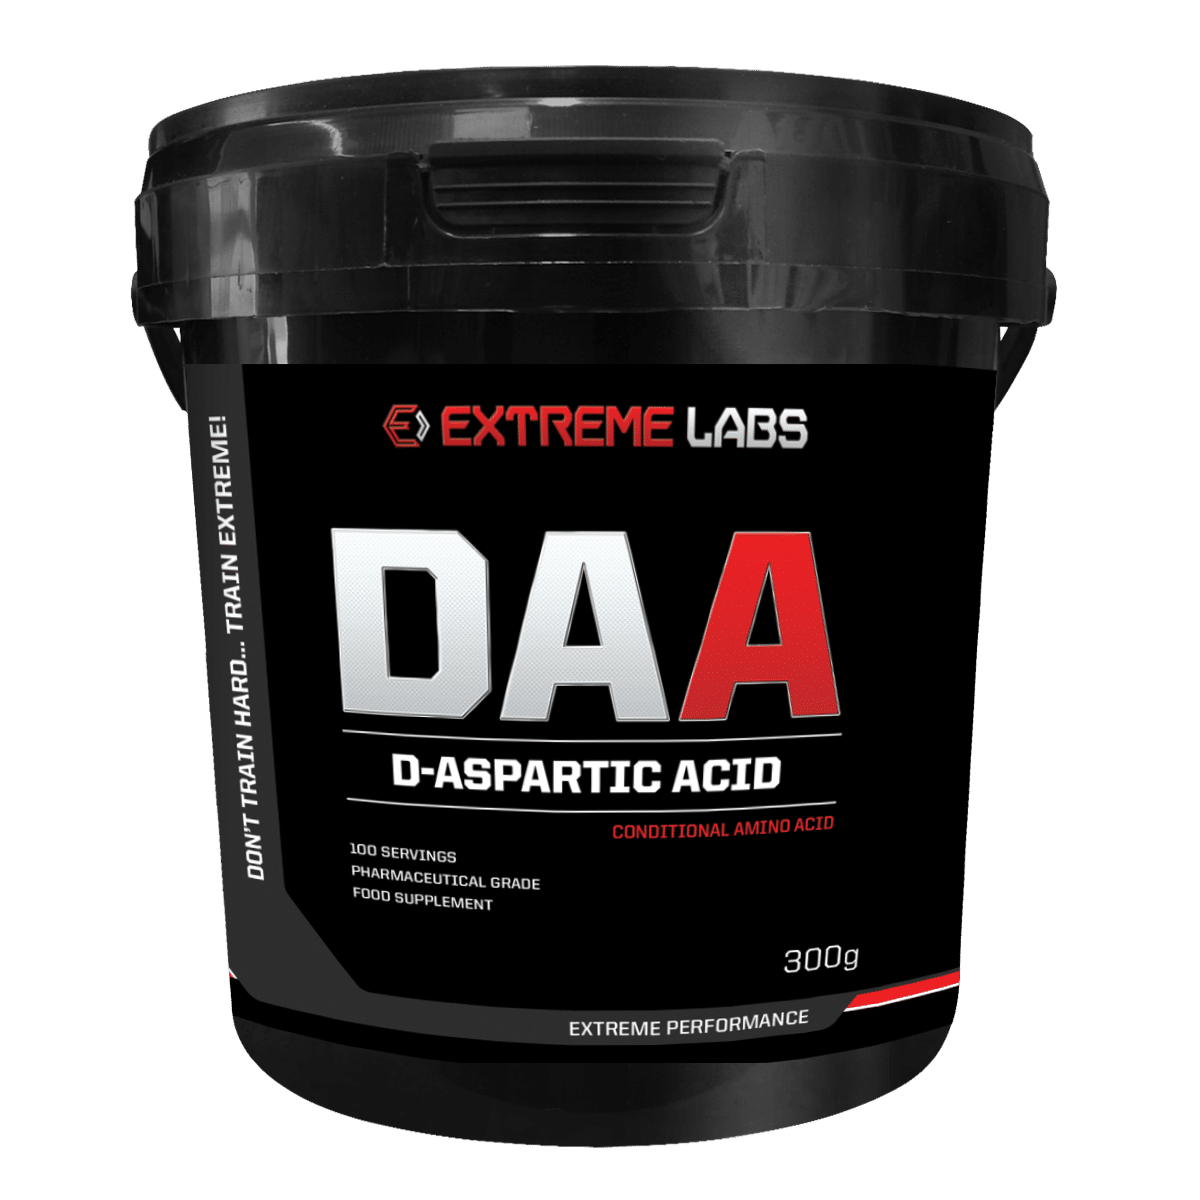 Extreme Labs Daa D Aspartic Acid The Grow Room